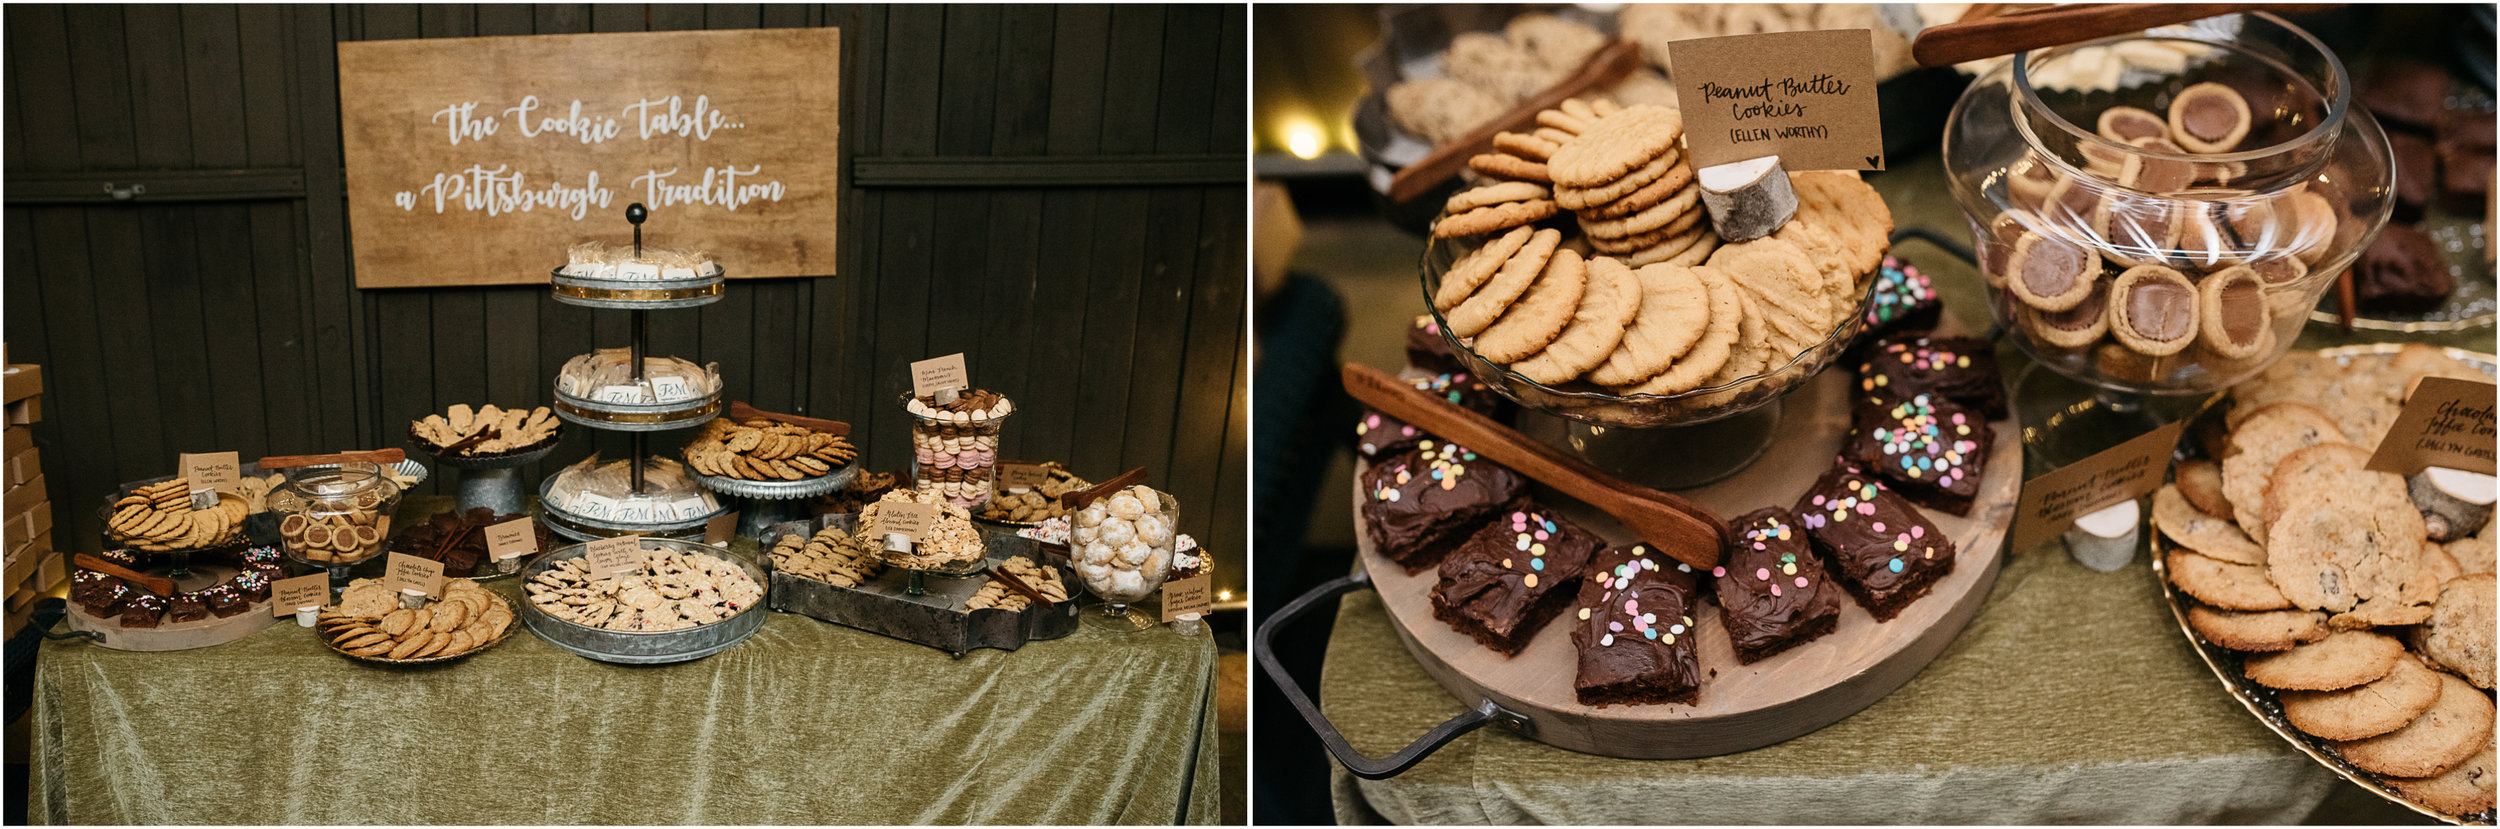 cookie table pittsburgh wedding morning glory inn.jpg